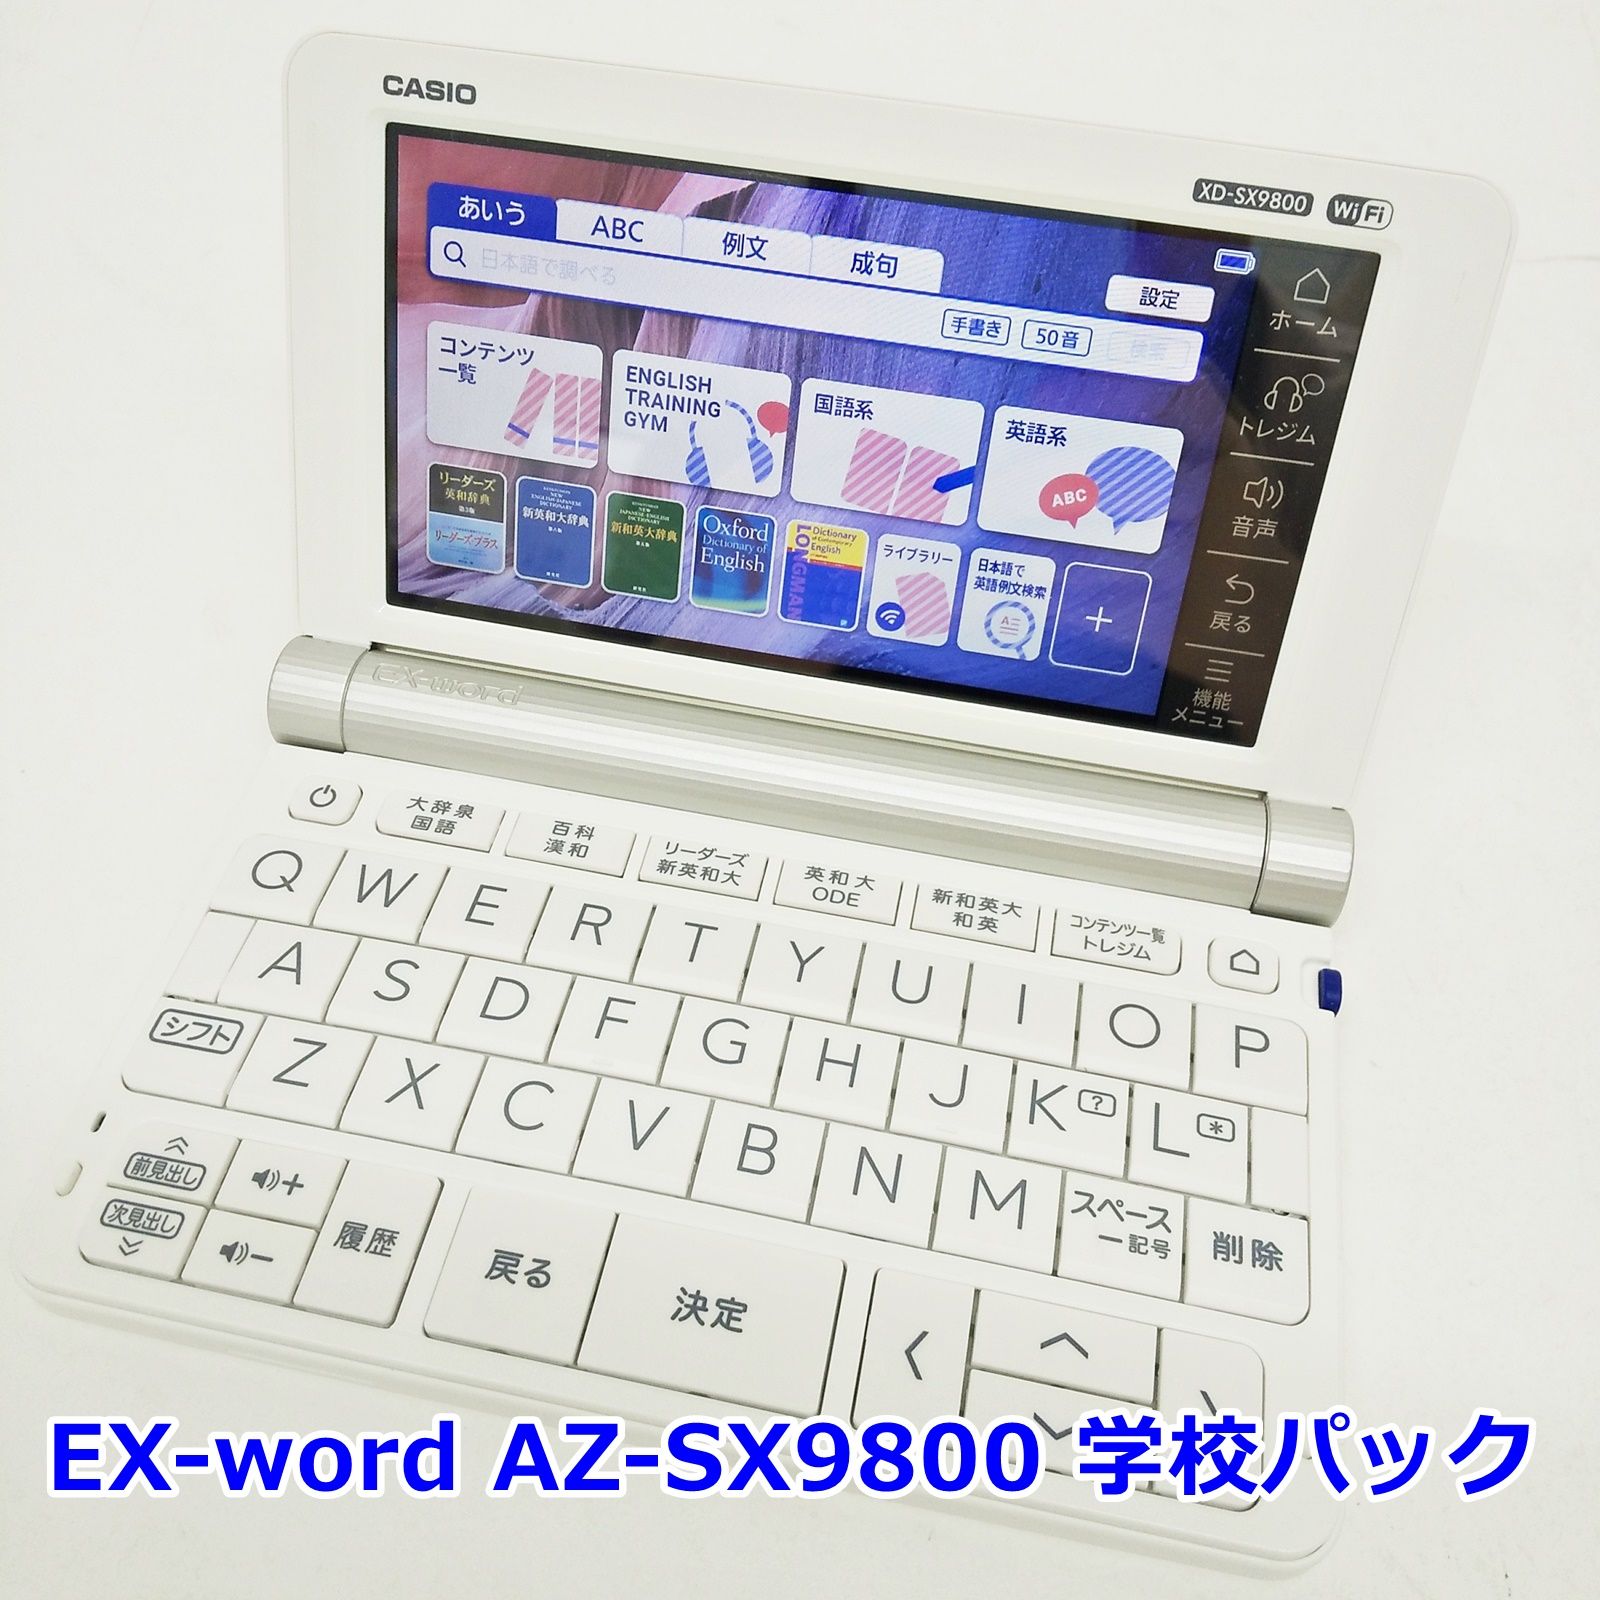 CASIO EX-word AZ-SX9800 電子辞書 学校パック 大学生モデル 英語強化 専門辞書コンテンツ WiFi ホワイト 語学 カシオ  XD-SX9800 R2307-070